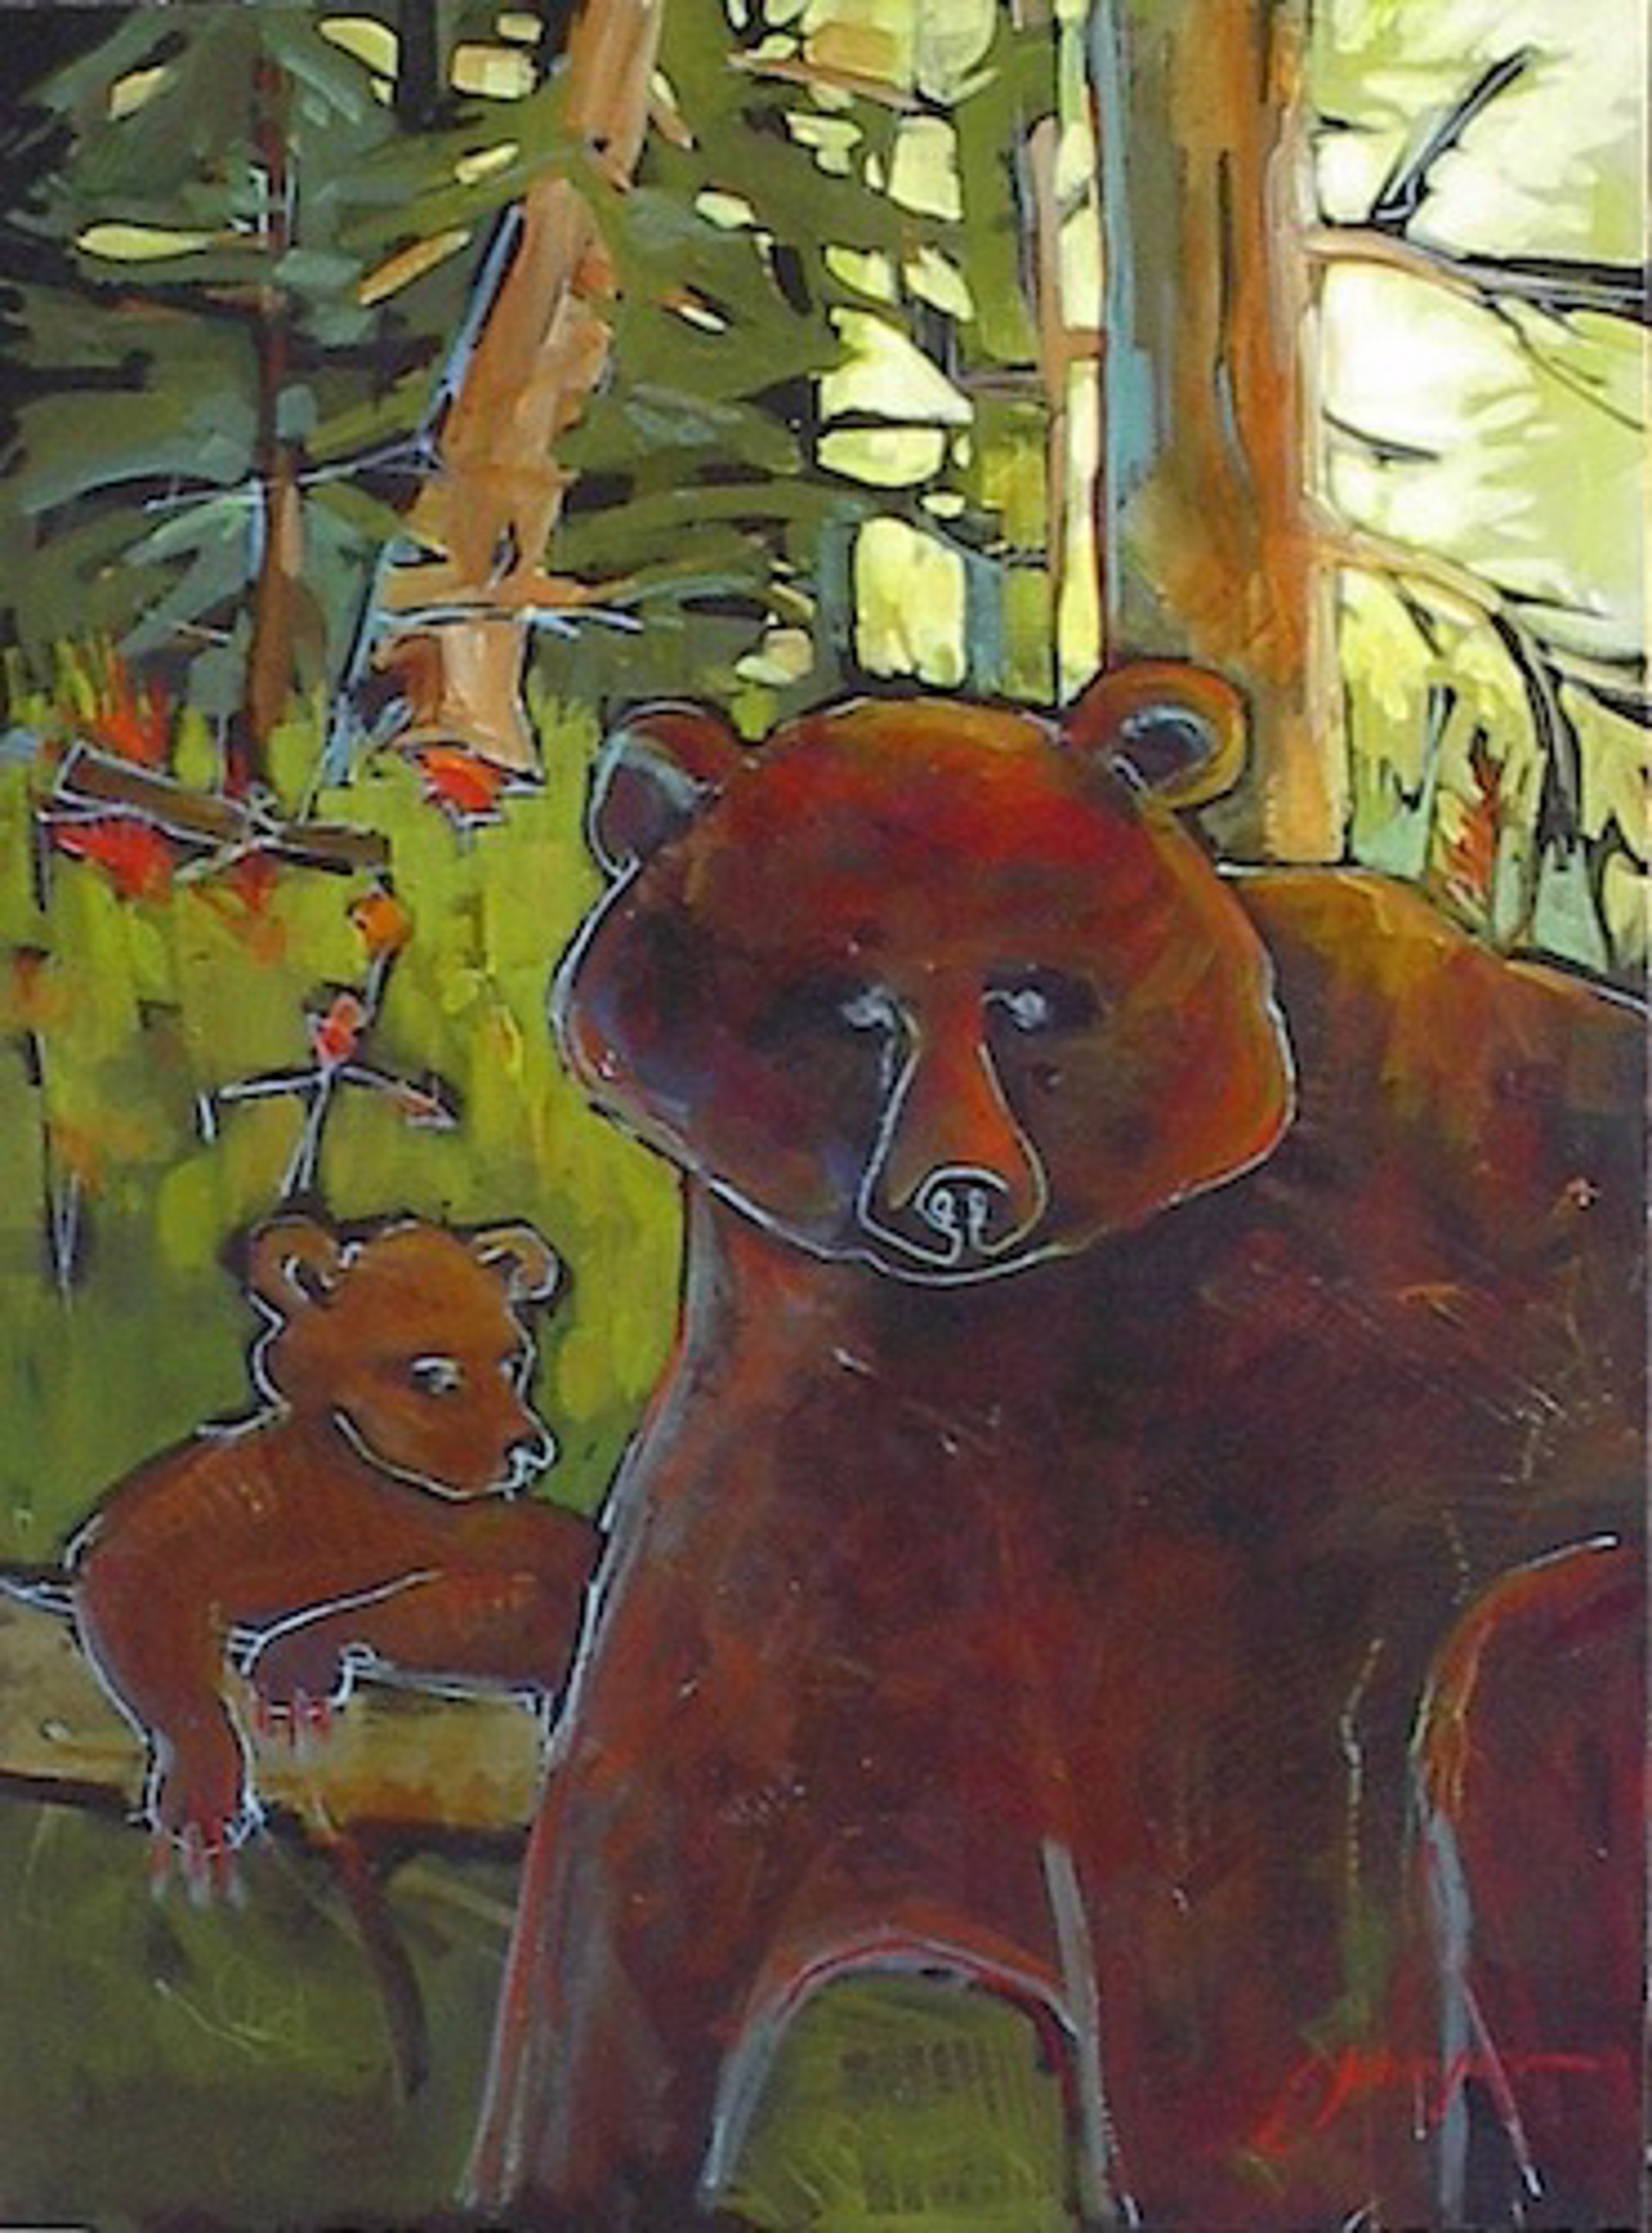 Bears Will Be Bears by Gail Johnson